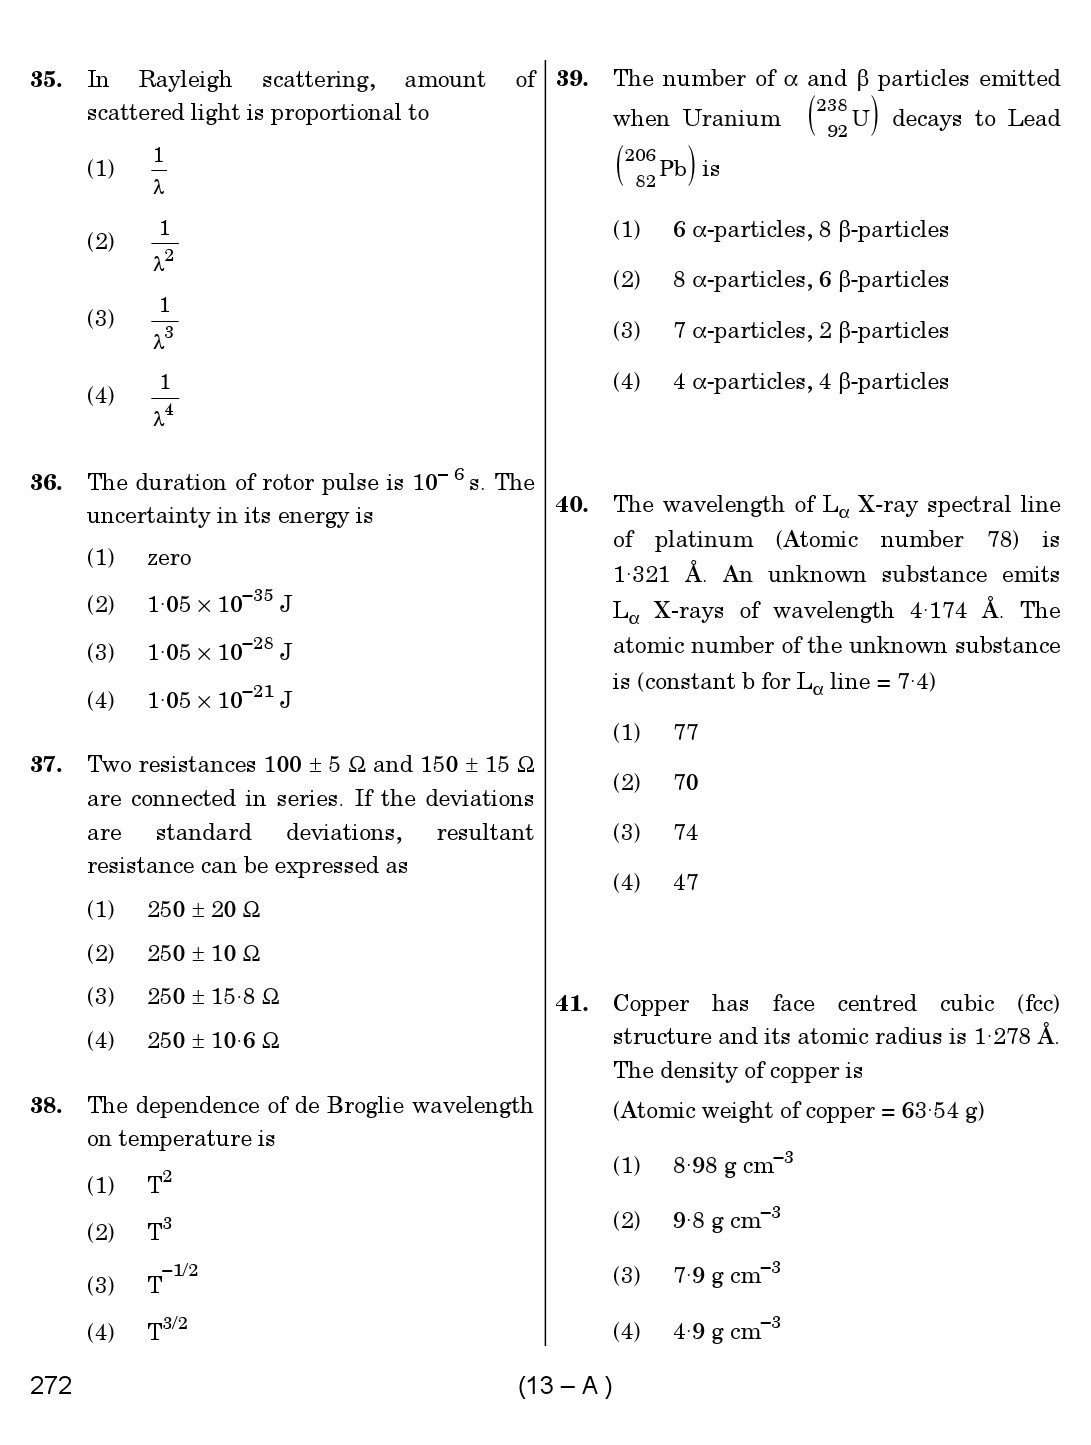 Karnataka PSC Mathematics Teacher Exam Sample Question Paper Subject code 272 13